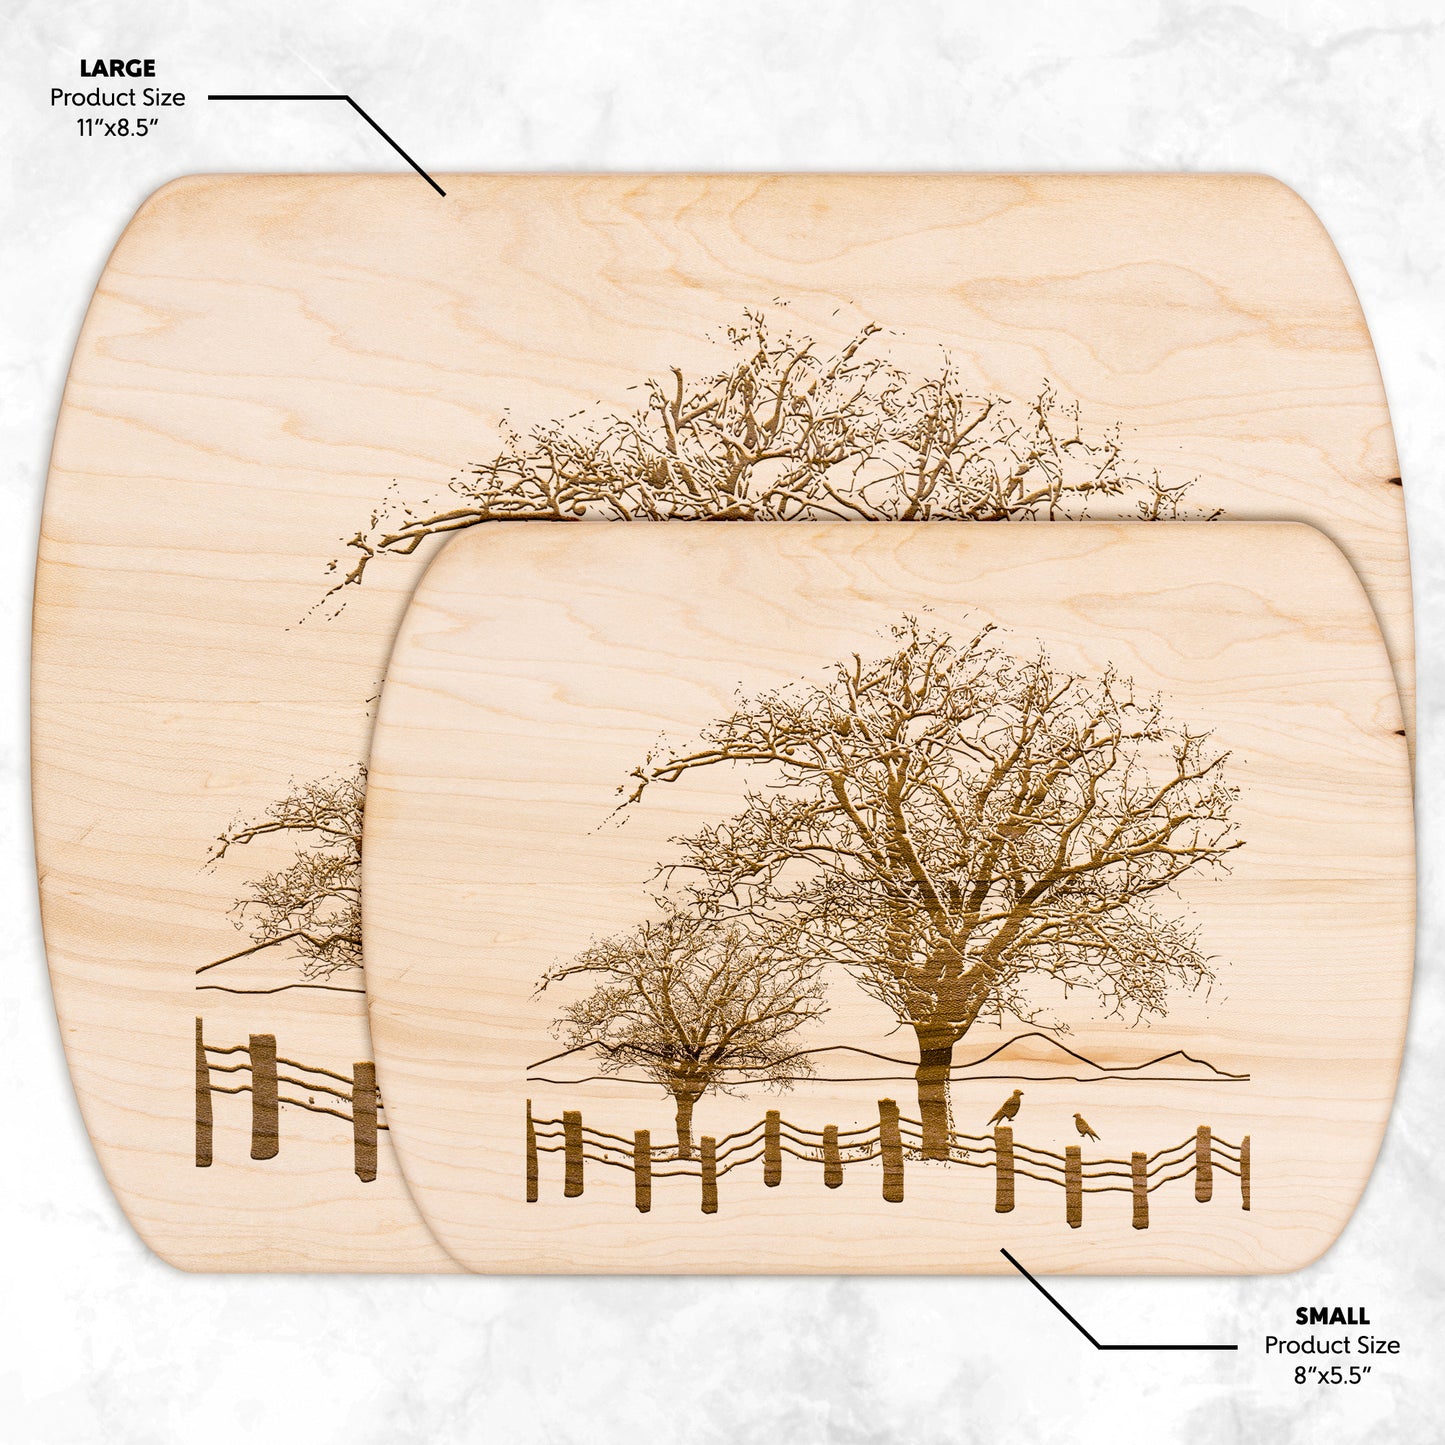 Walnut Cutting Board, Maple Cutting Board, Oval Cutting Board with Trees & Fence, Great Housewarming Gift, Hardwood Farm Boards Made in USA